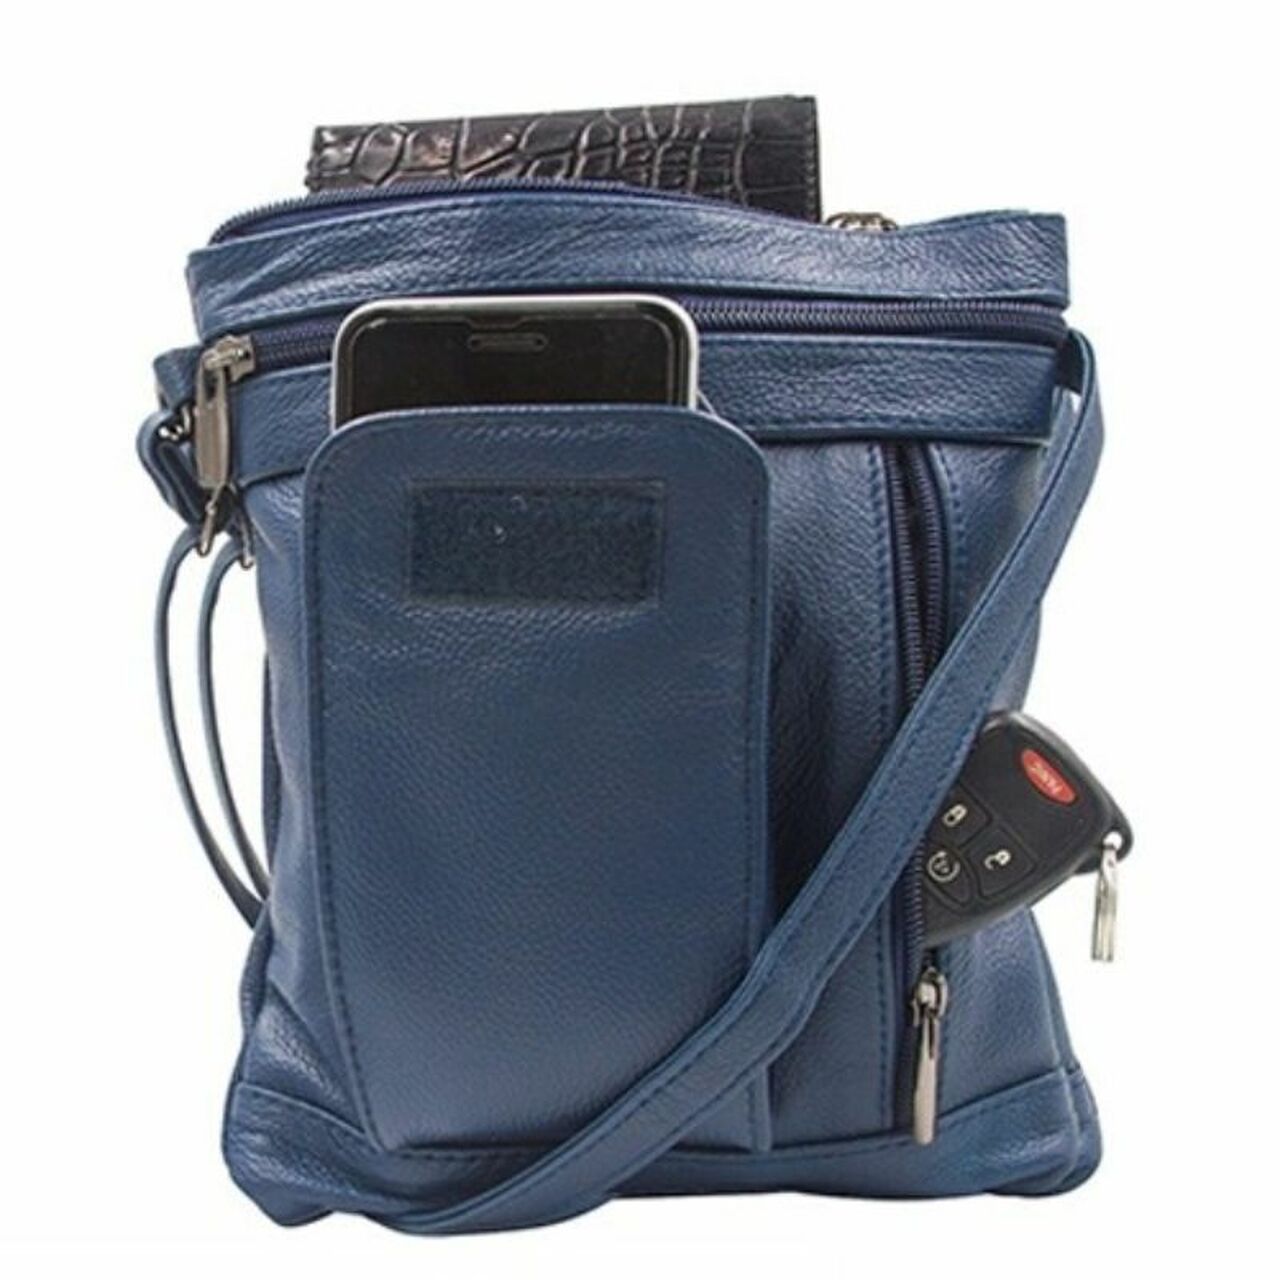 Leather Crossbody Handbag With Outside Pockets - Tigbul's Variety Fashion Shop